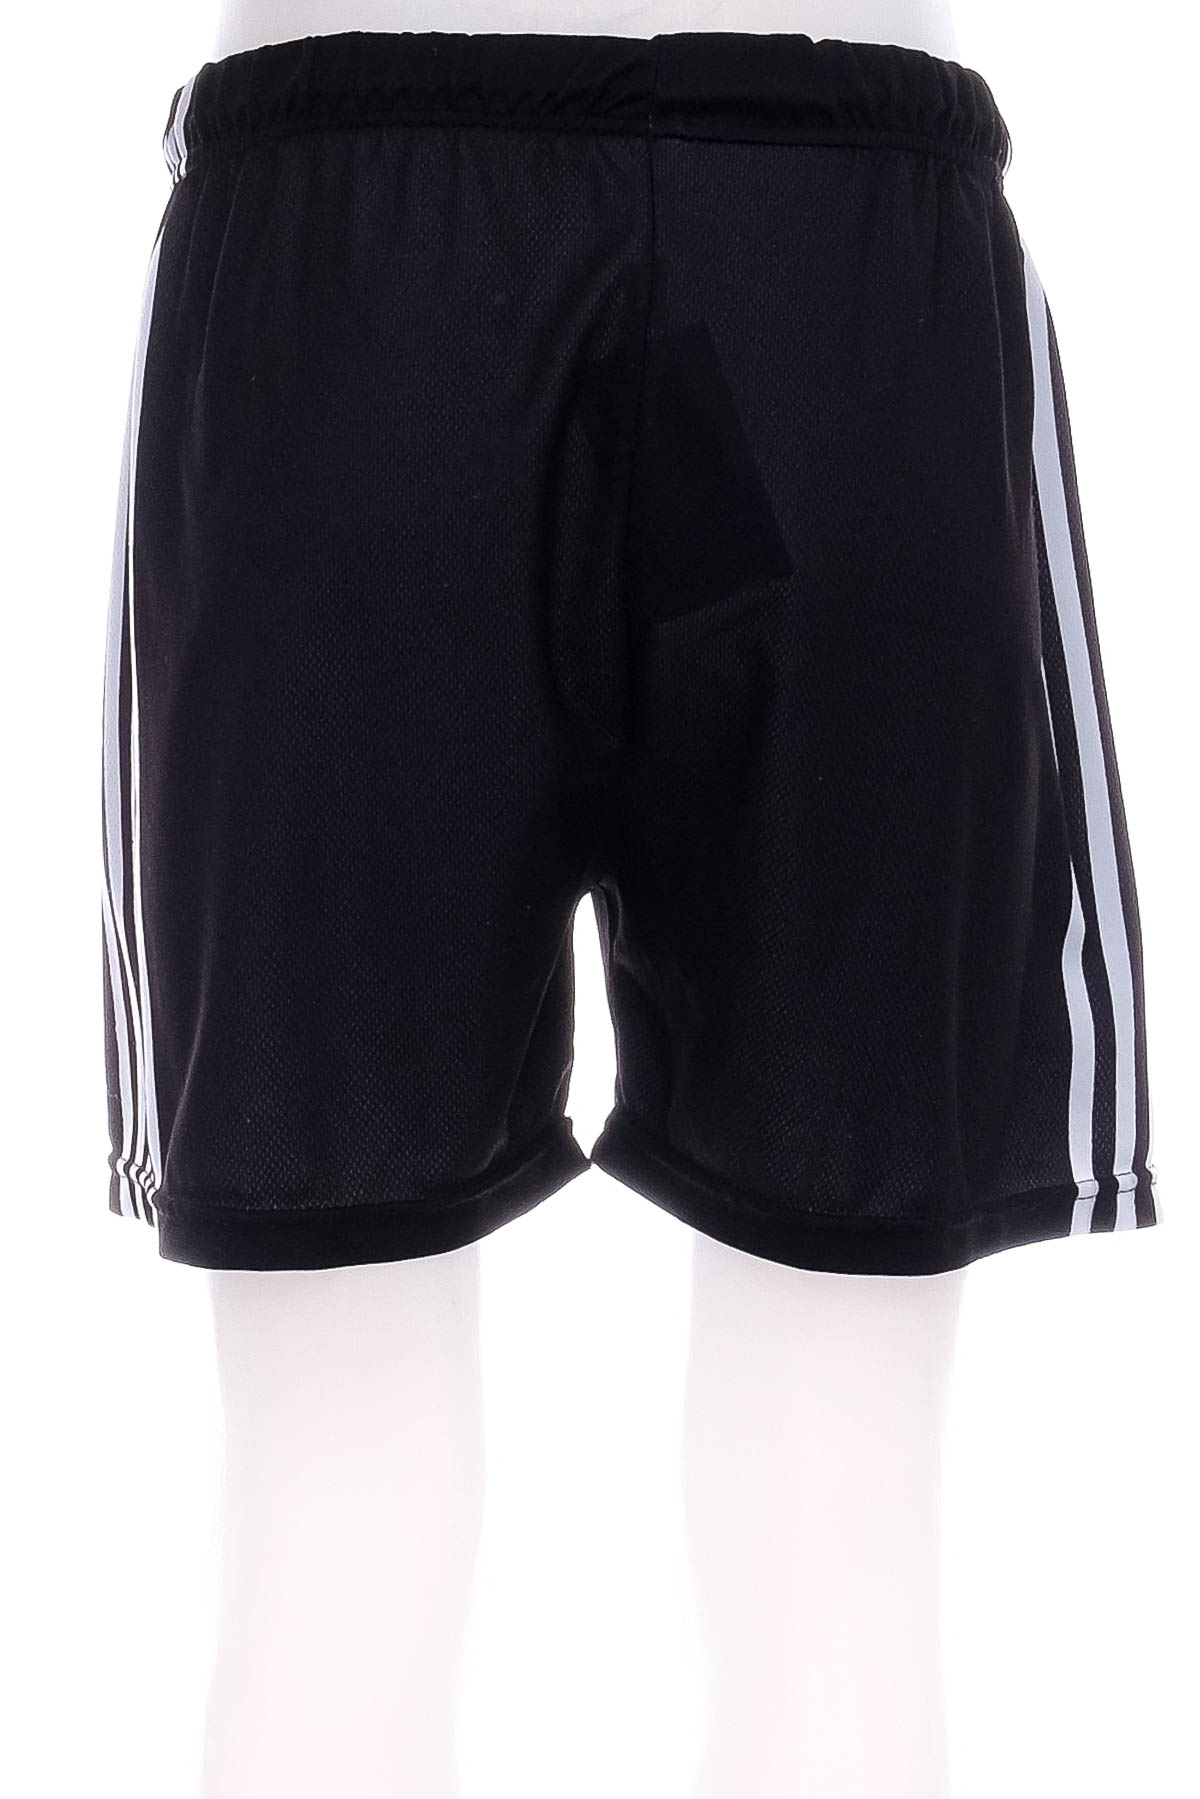 Men's shorts - 1